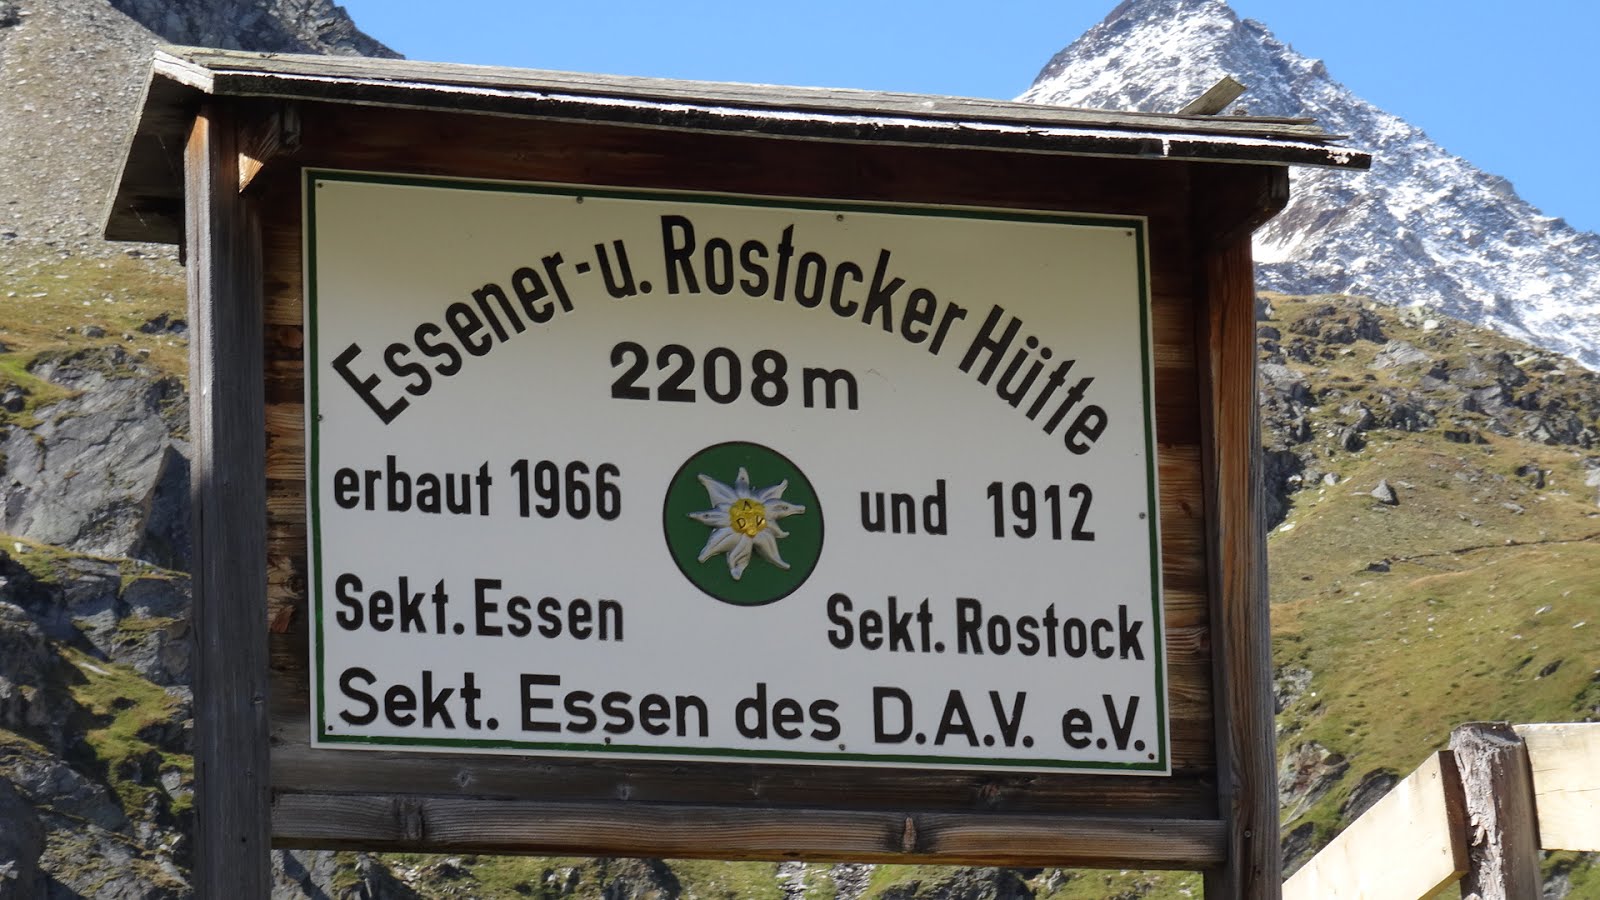 Essener-Rostocker hutte